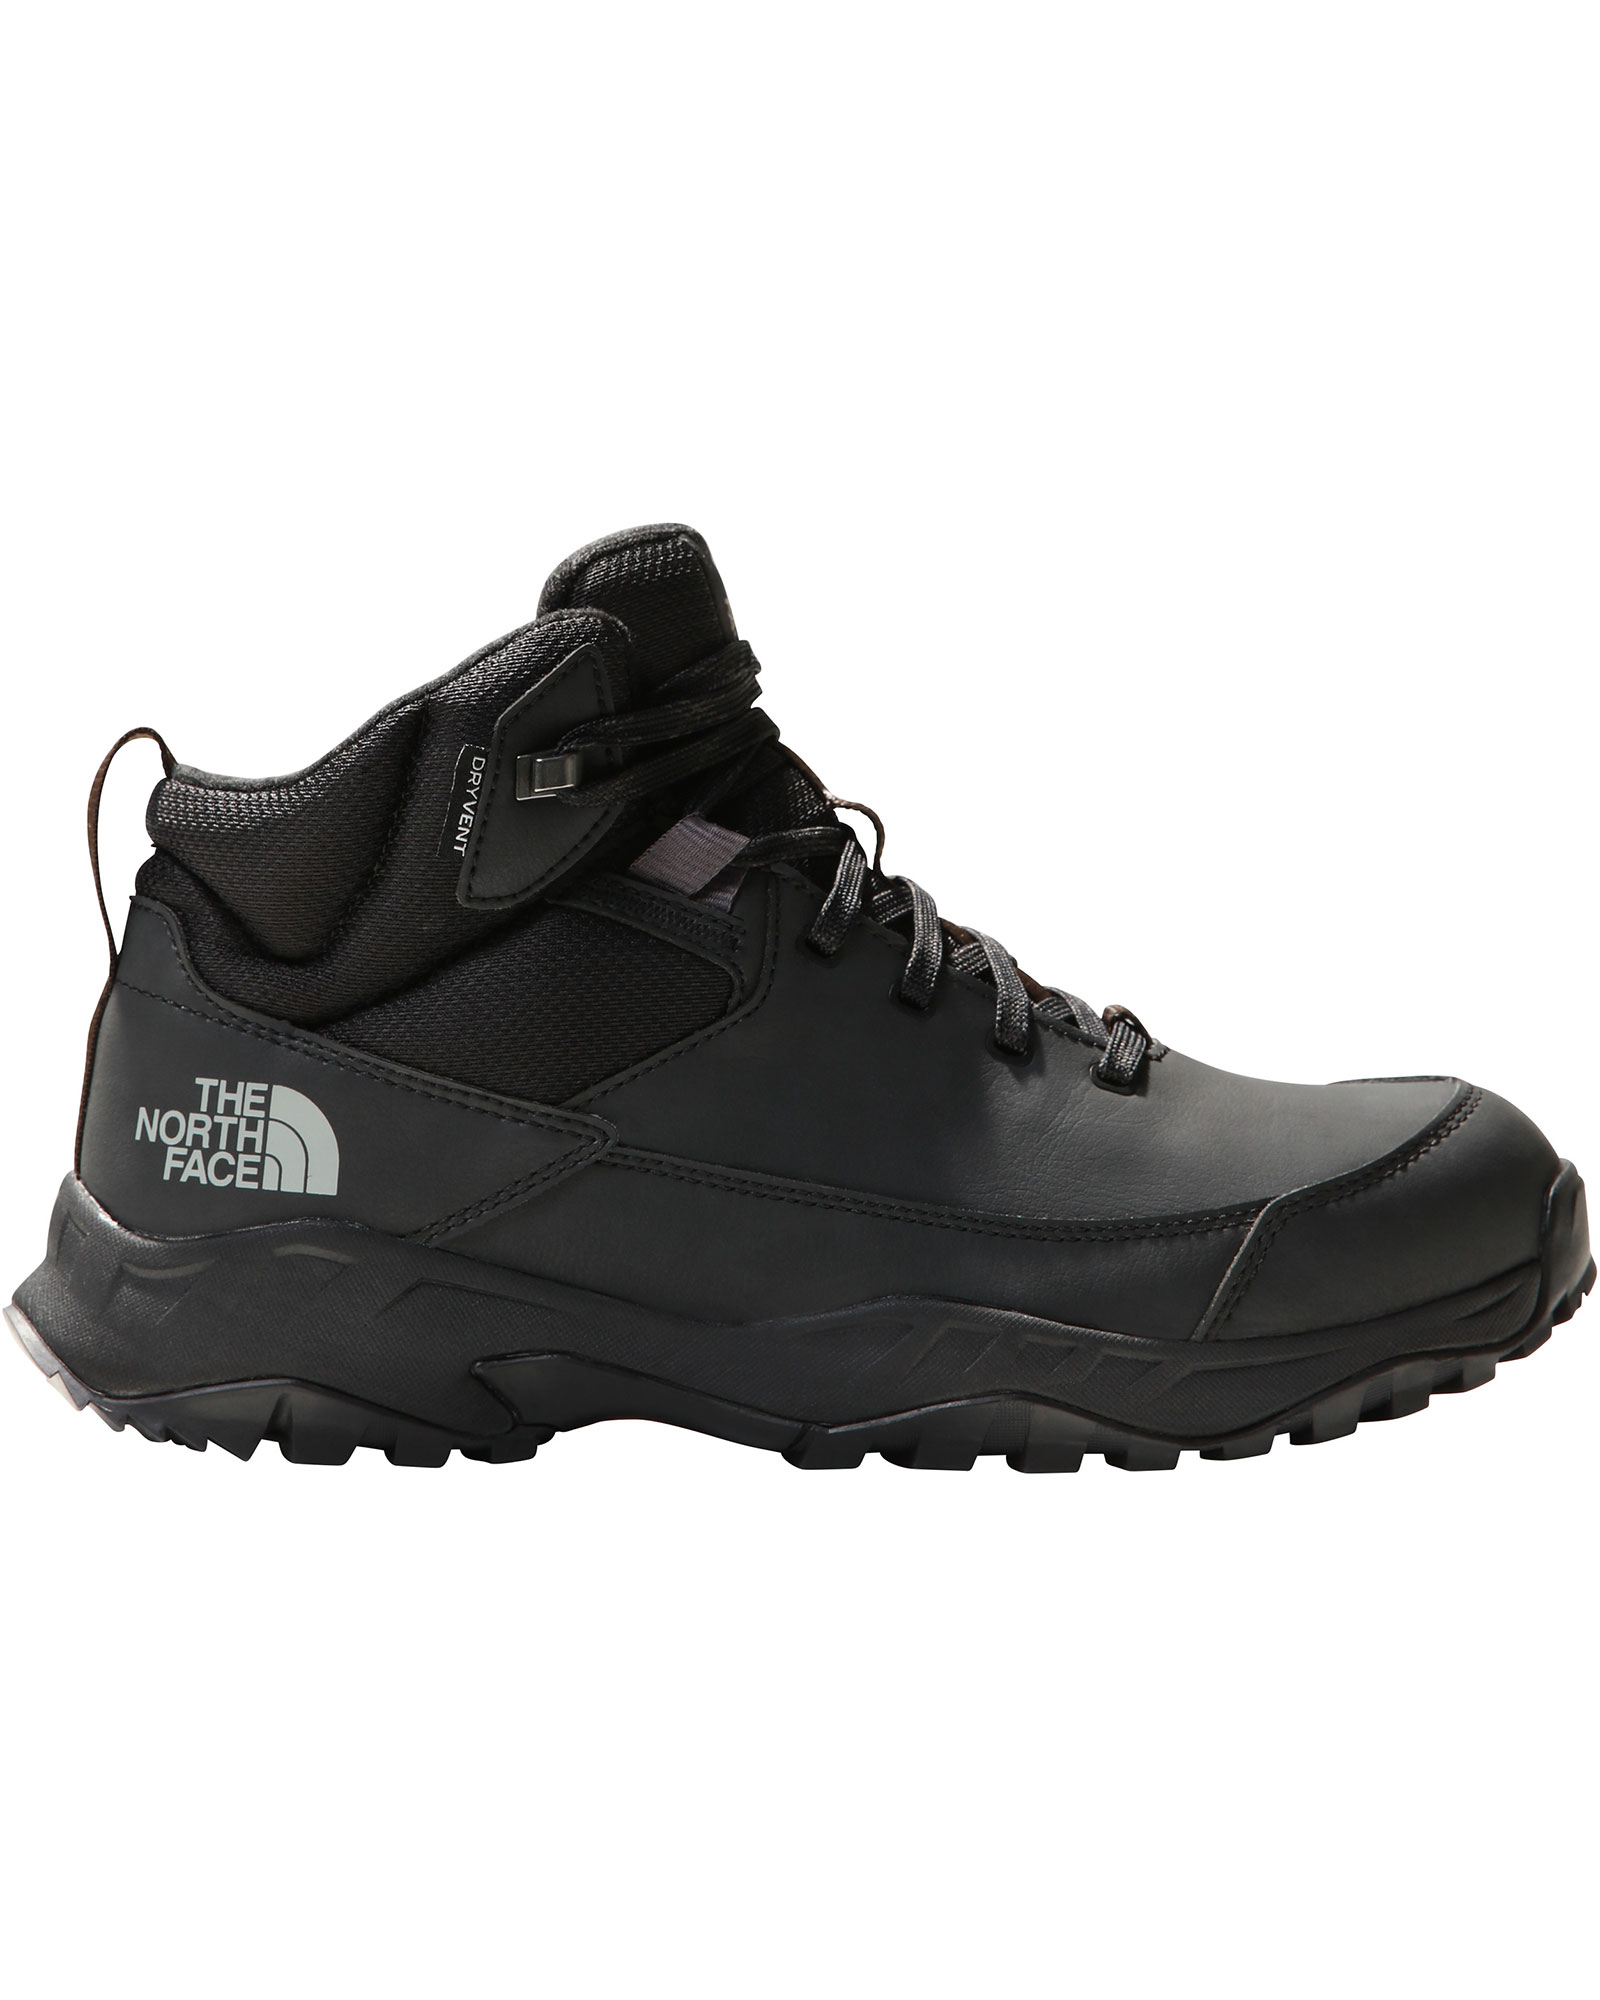 The North Face Storm Strike III Waterproof Men’s Boots - TNF Black/Asphalt Grey UK 10